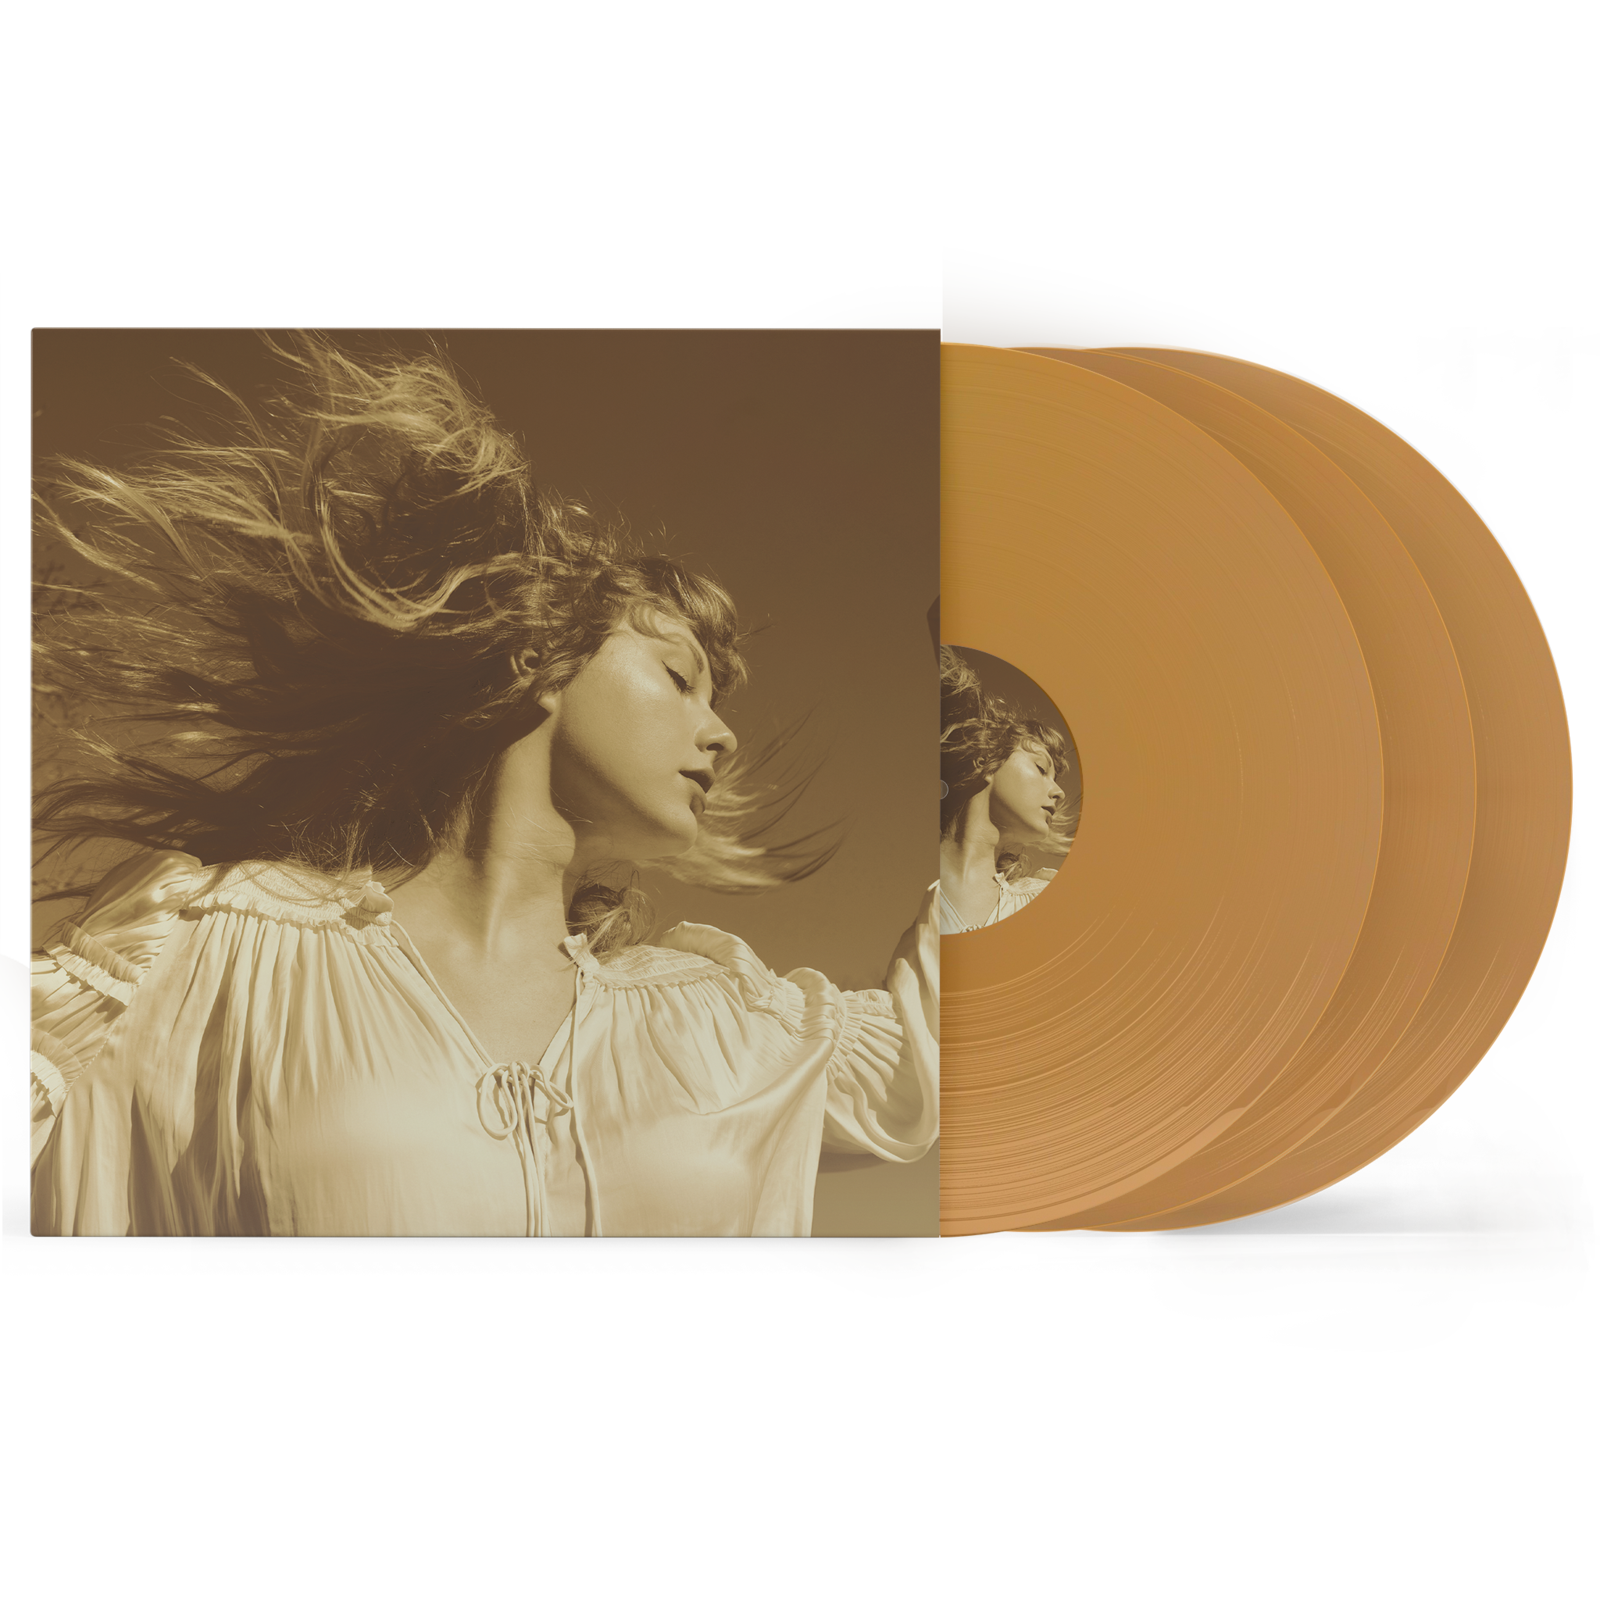 Taylor Swift - Fearless (Taylor's Version): Gold Vinyl 3LP